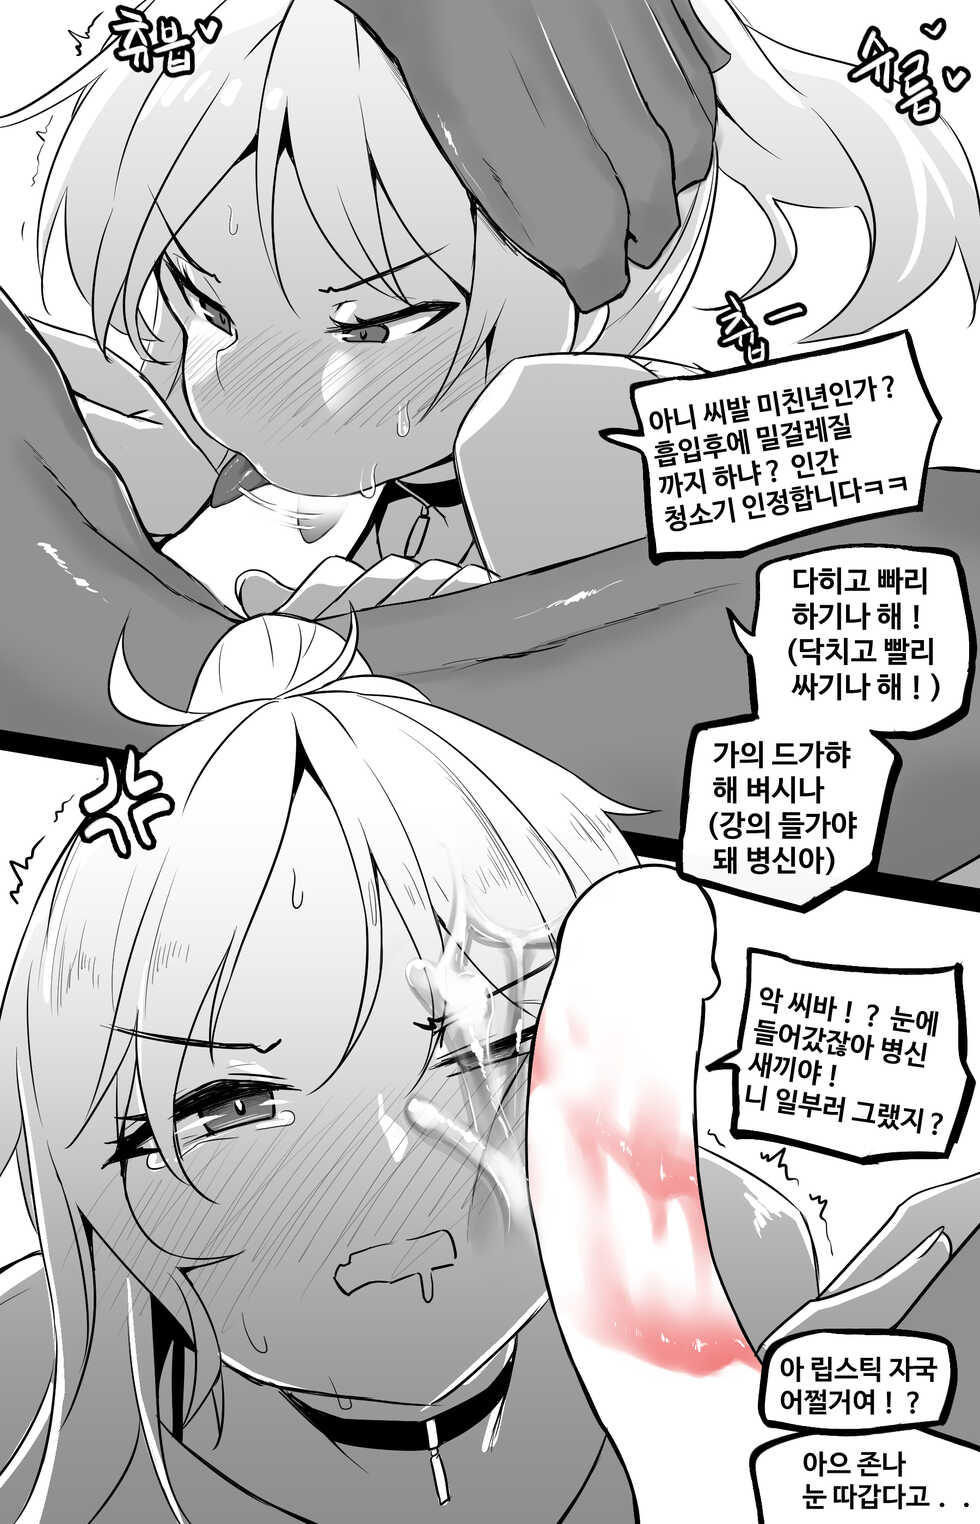 (mangmoongming)세상에서 가장 빠꾸 없는 남여사친(pixiv) - Page 6